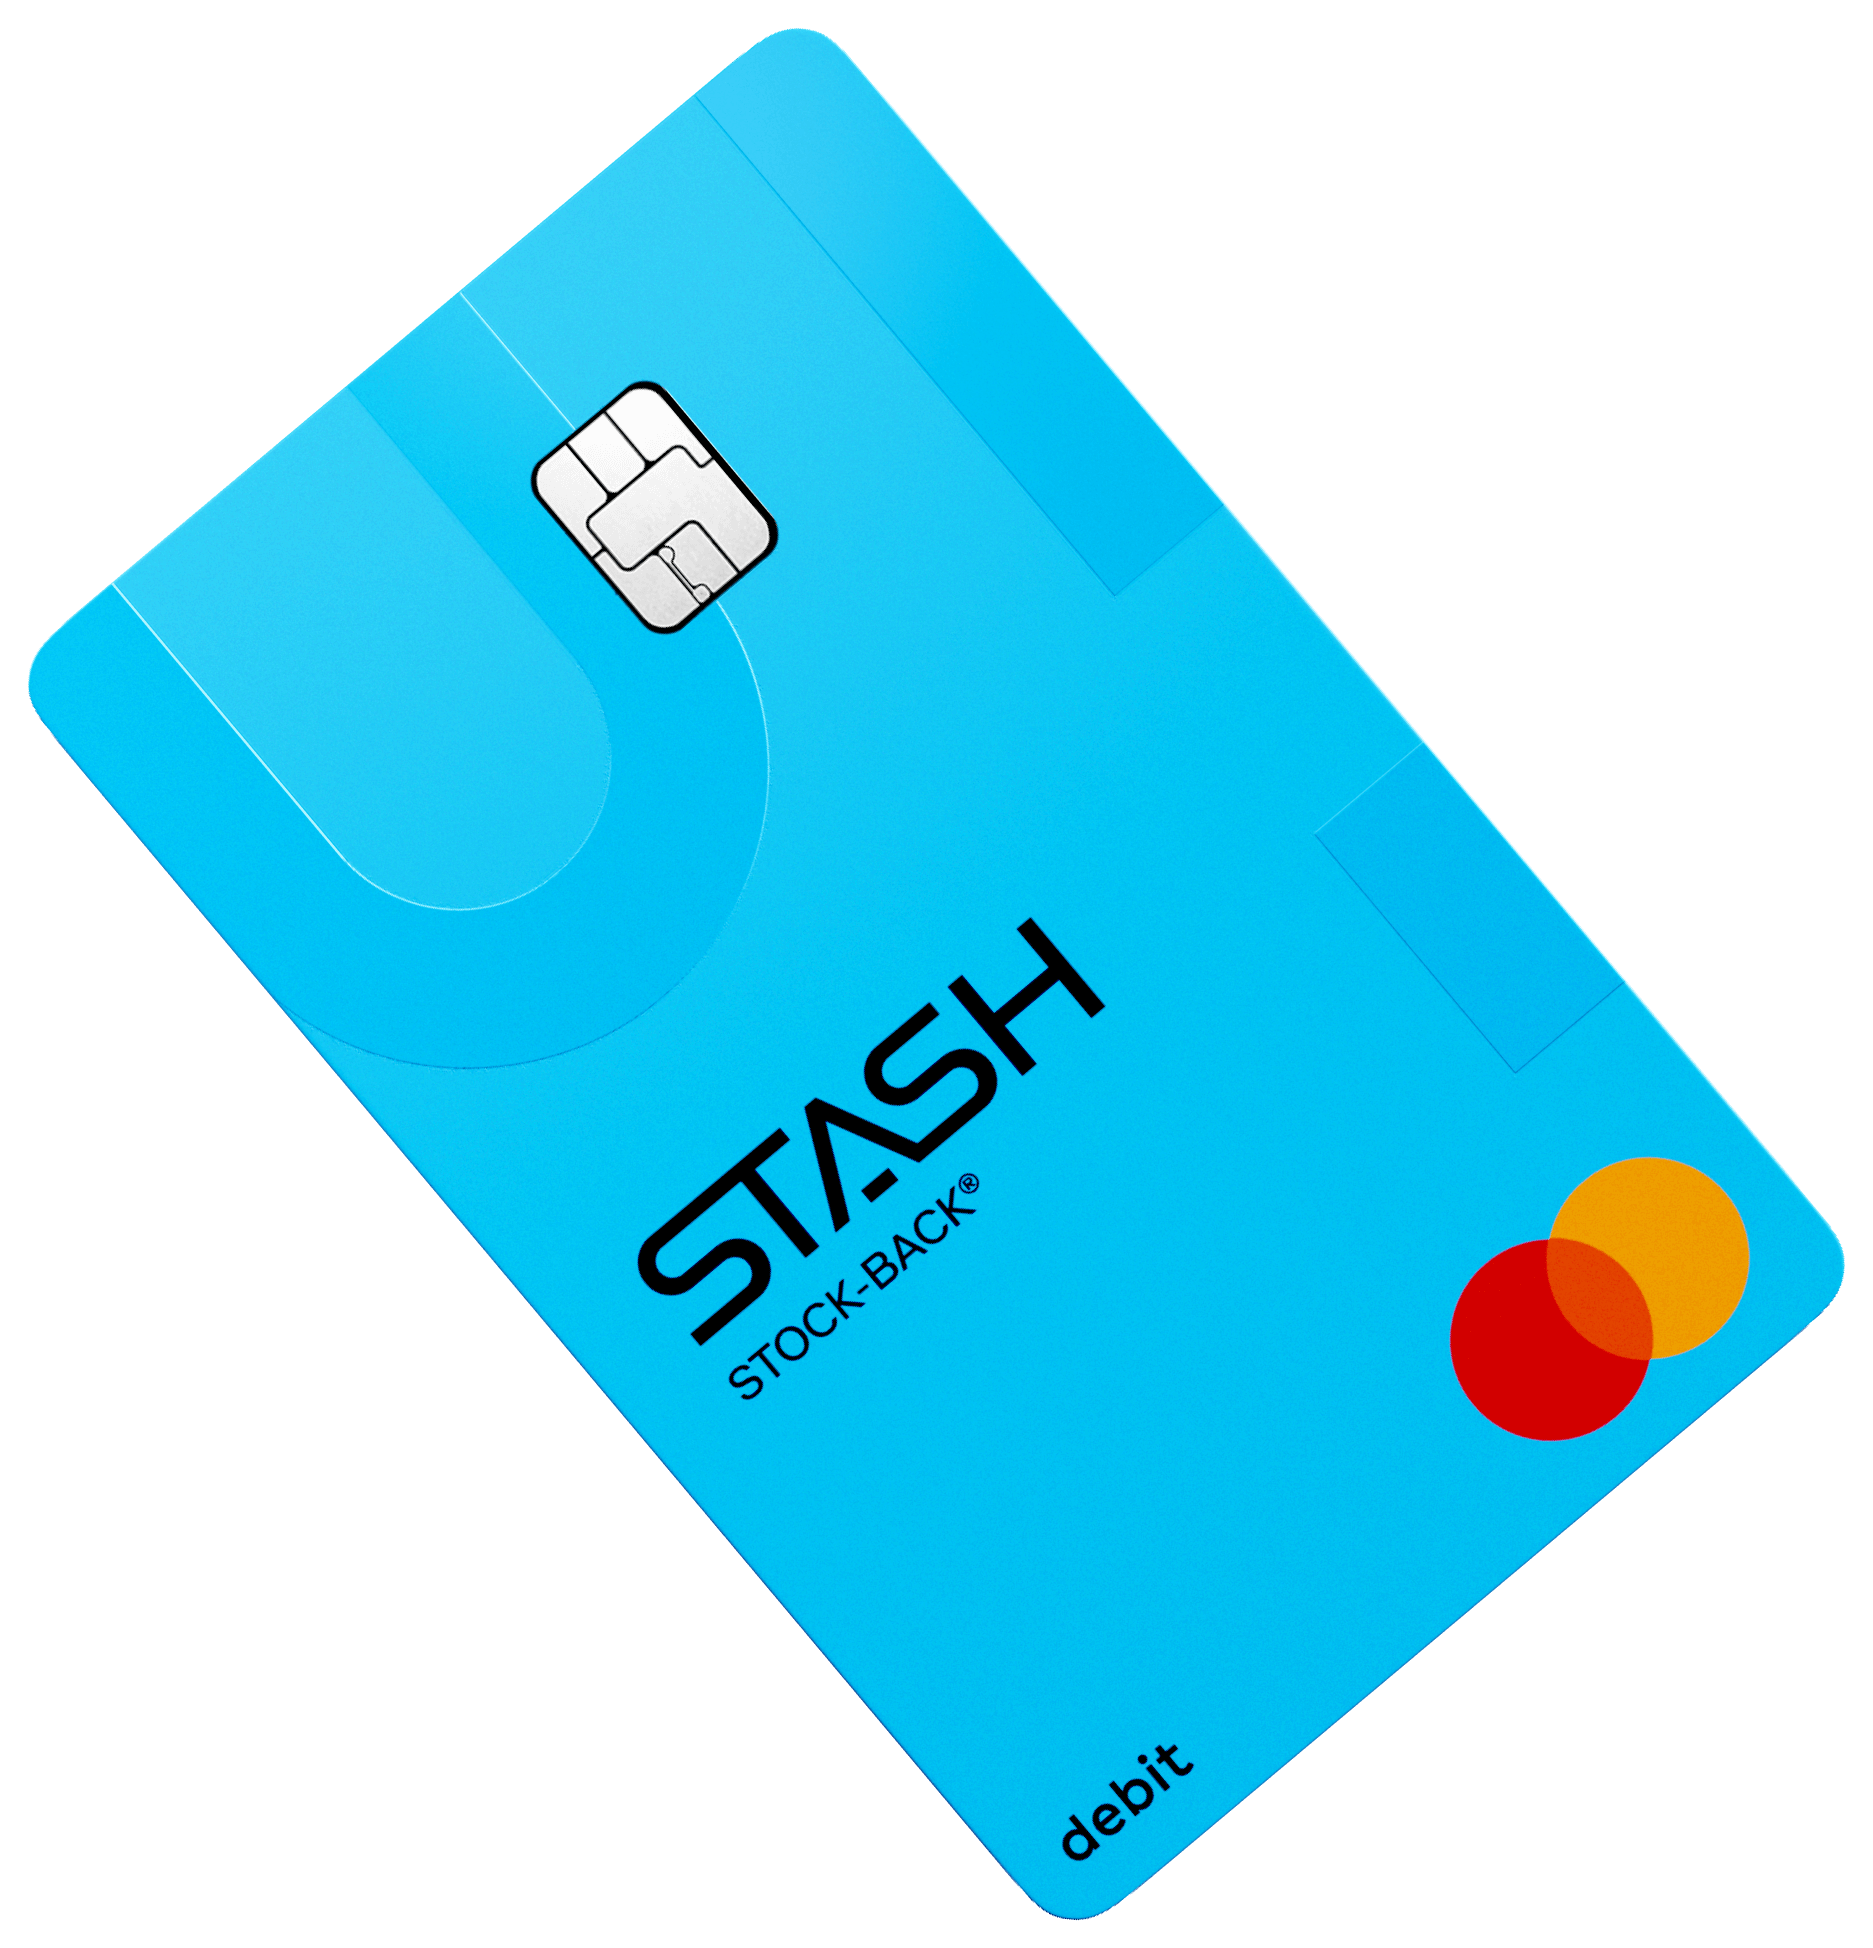 Stash bank card with Mastercard logo